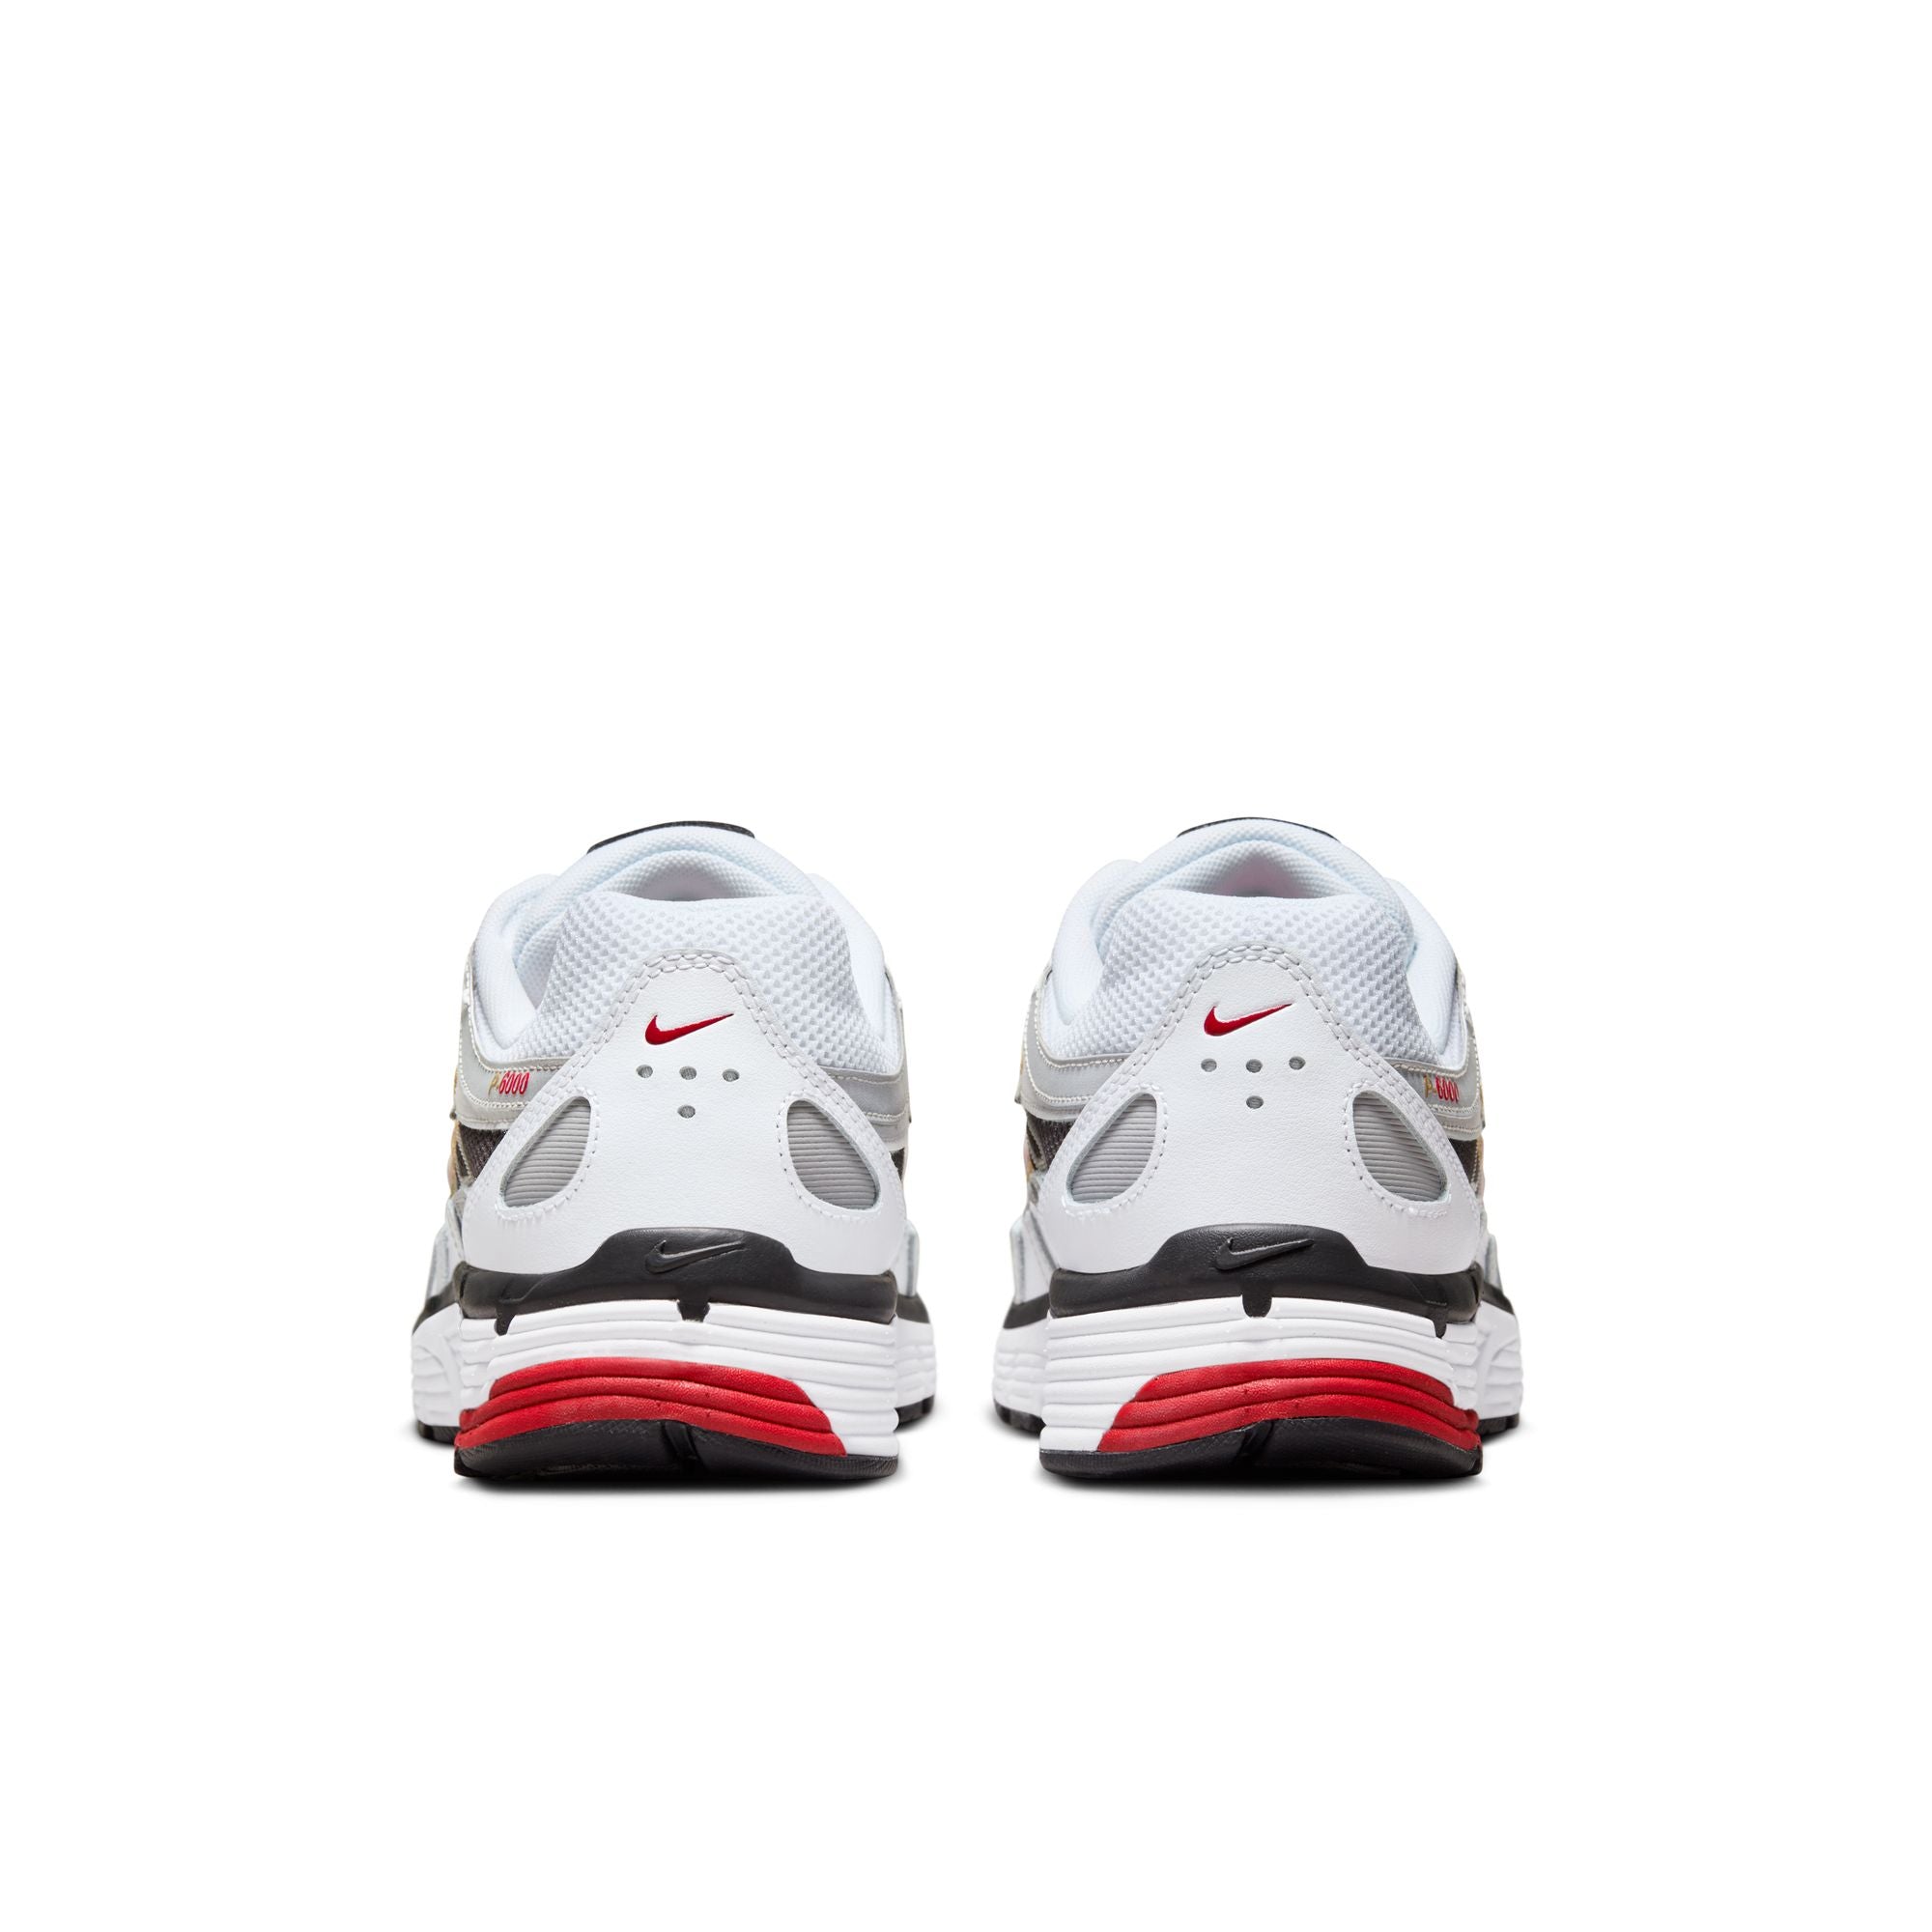 Nike Men's P-6000 Shoes